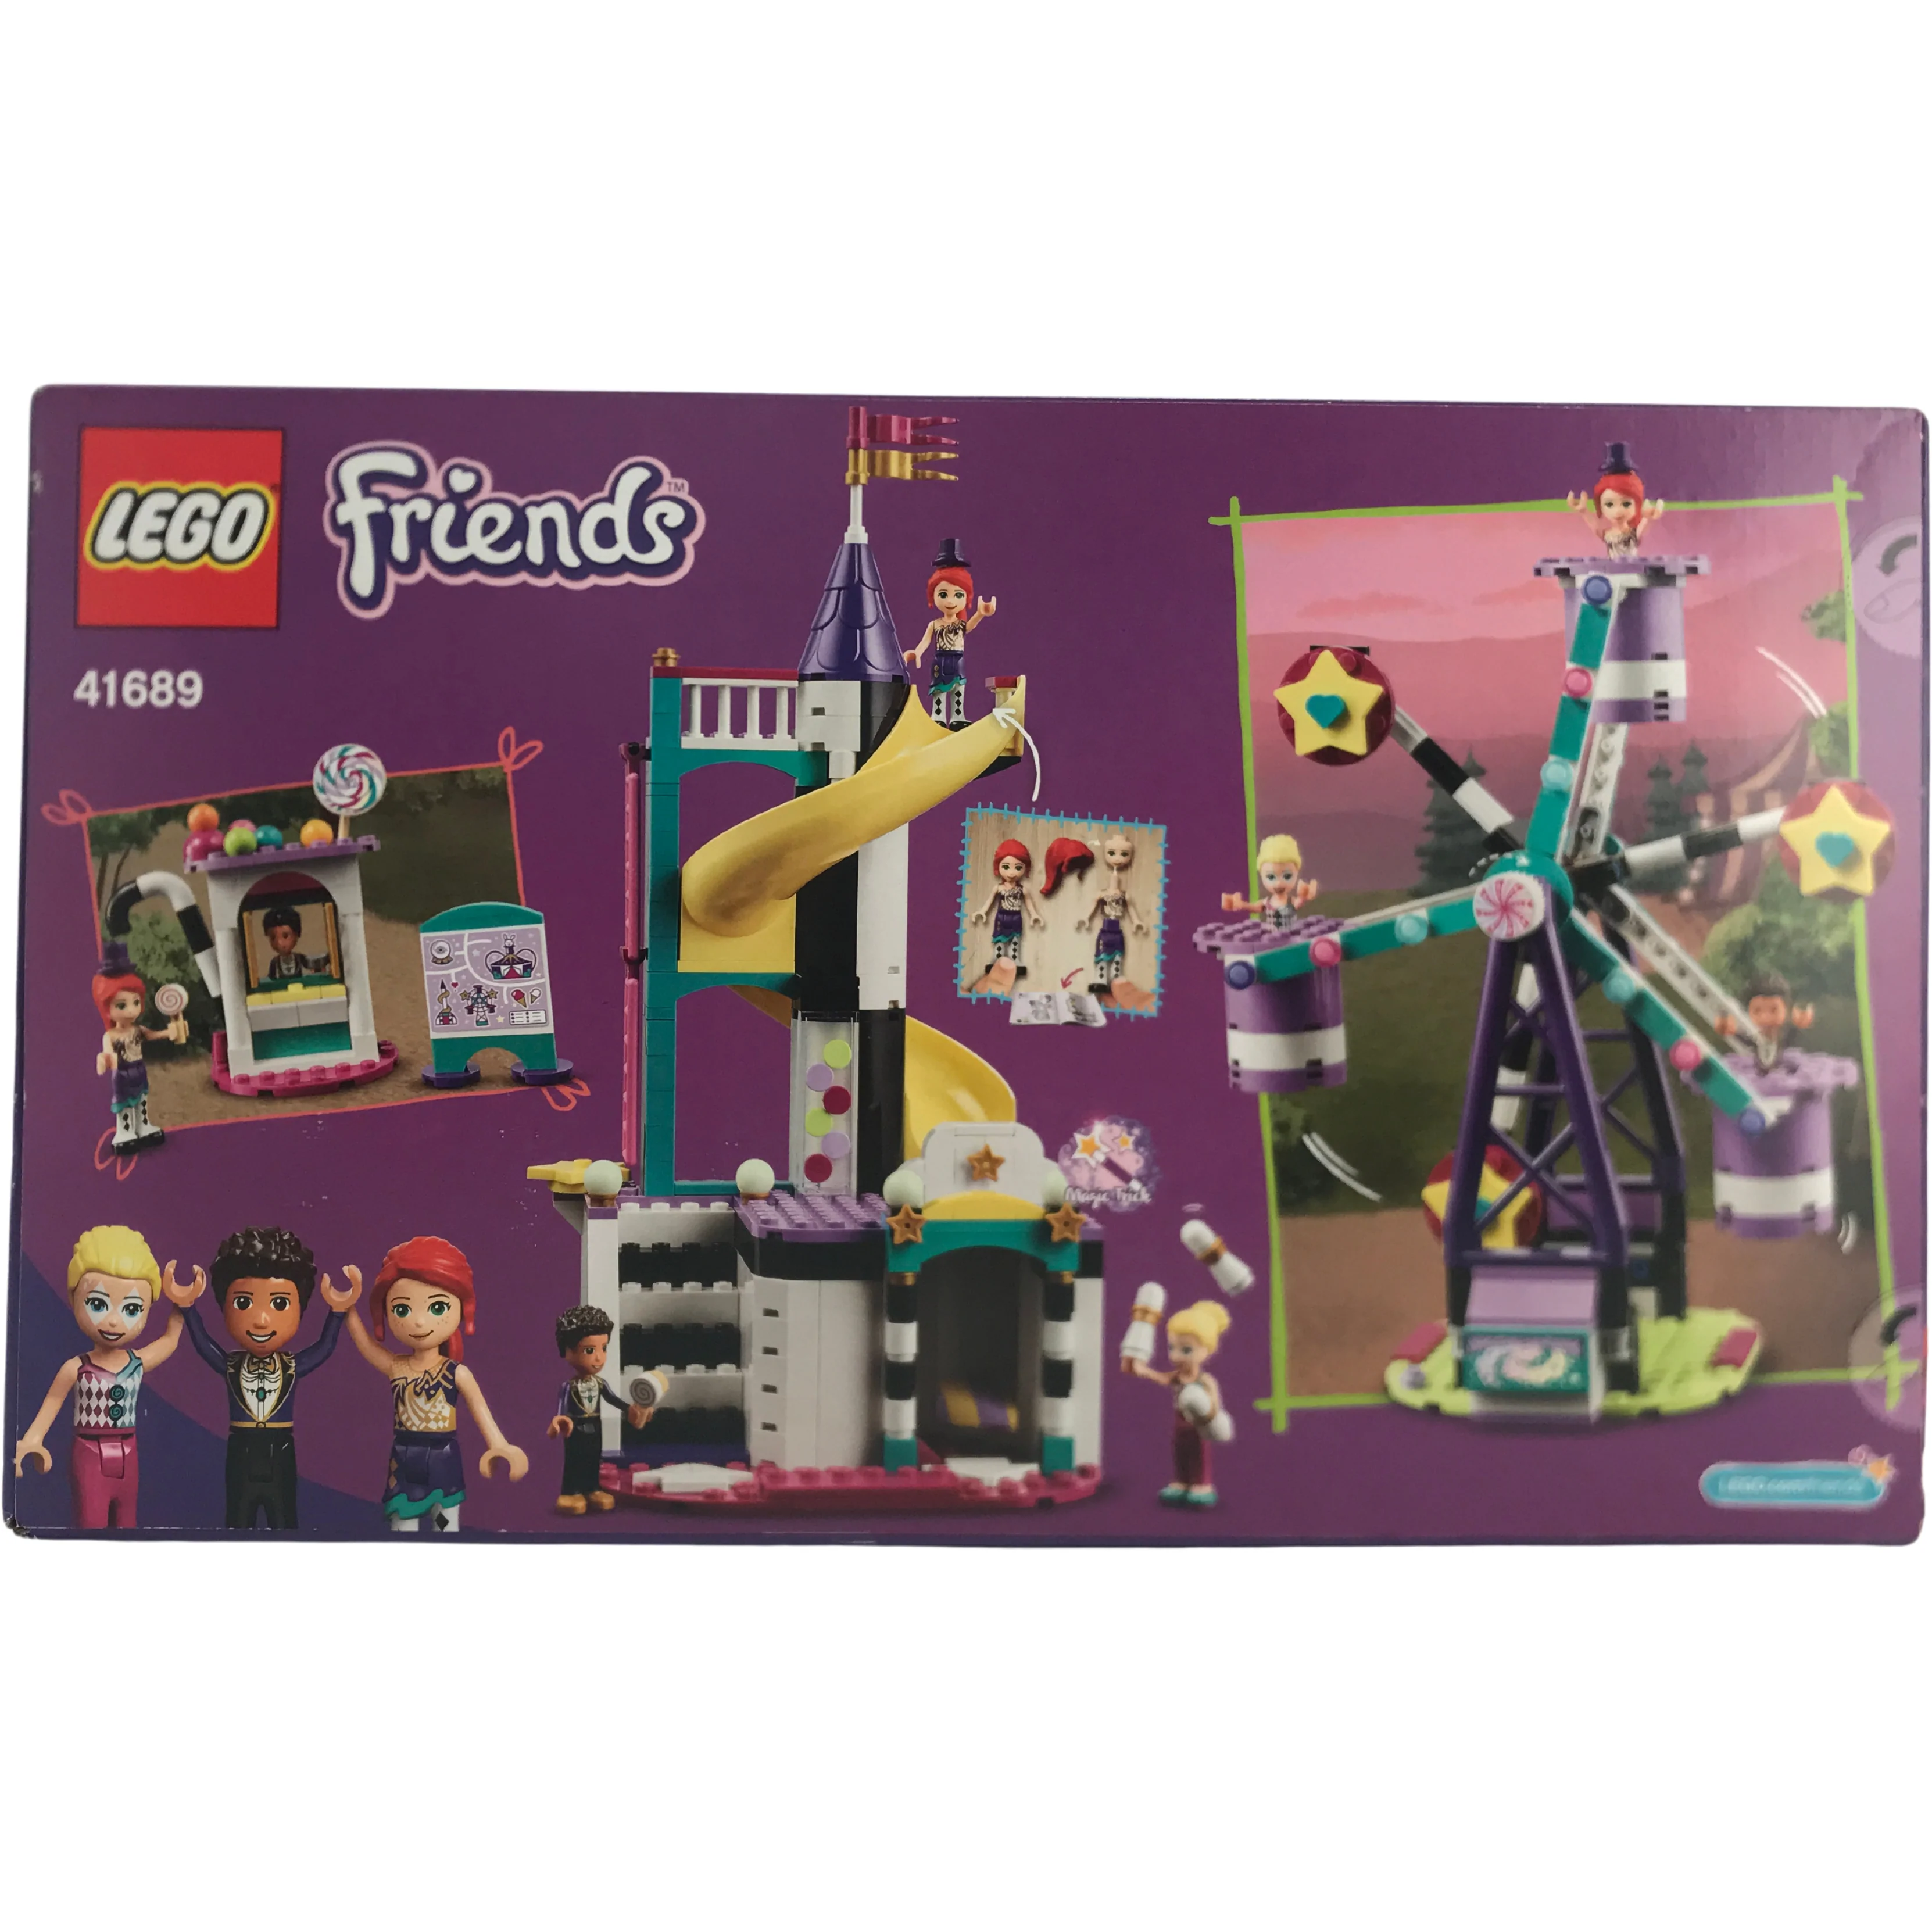 Lego Friends Magical Ferris Wheel and Slide / 41689 / 545 Pieces / Ages 7+ **DEALS**